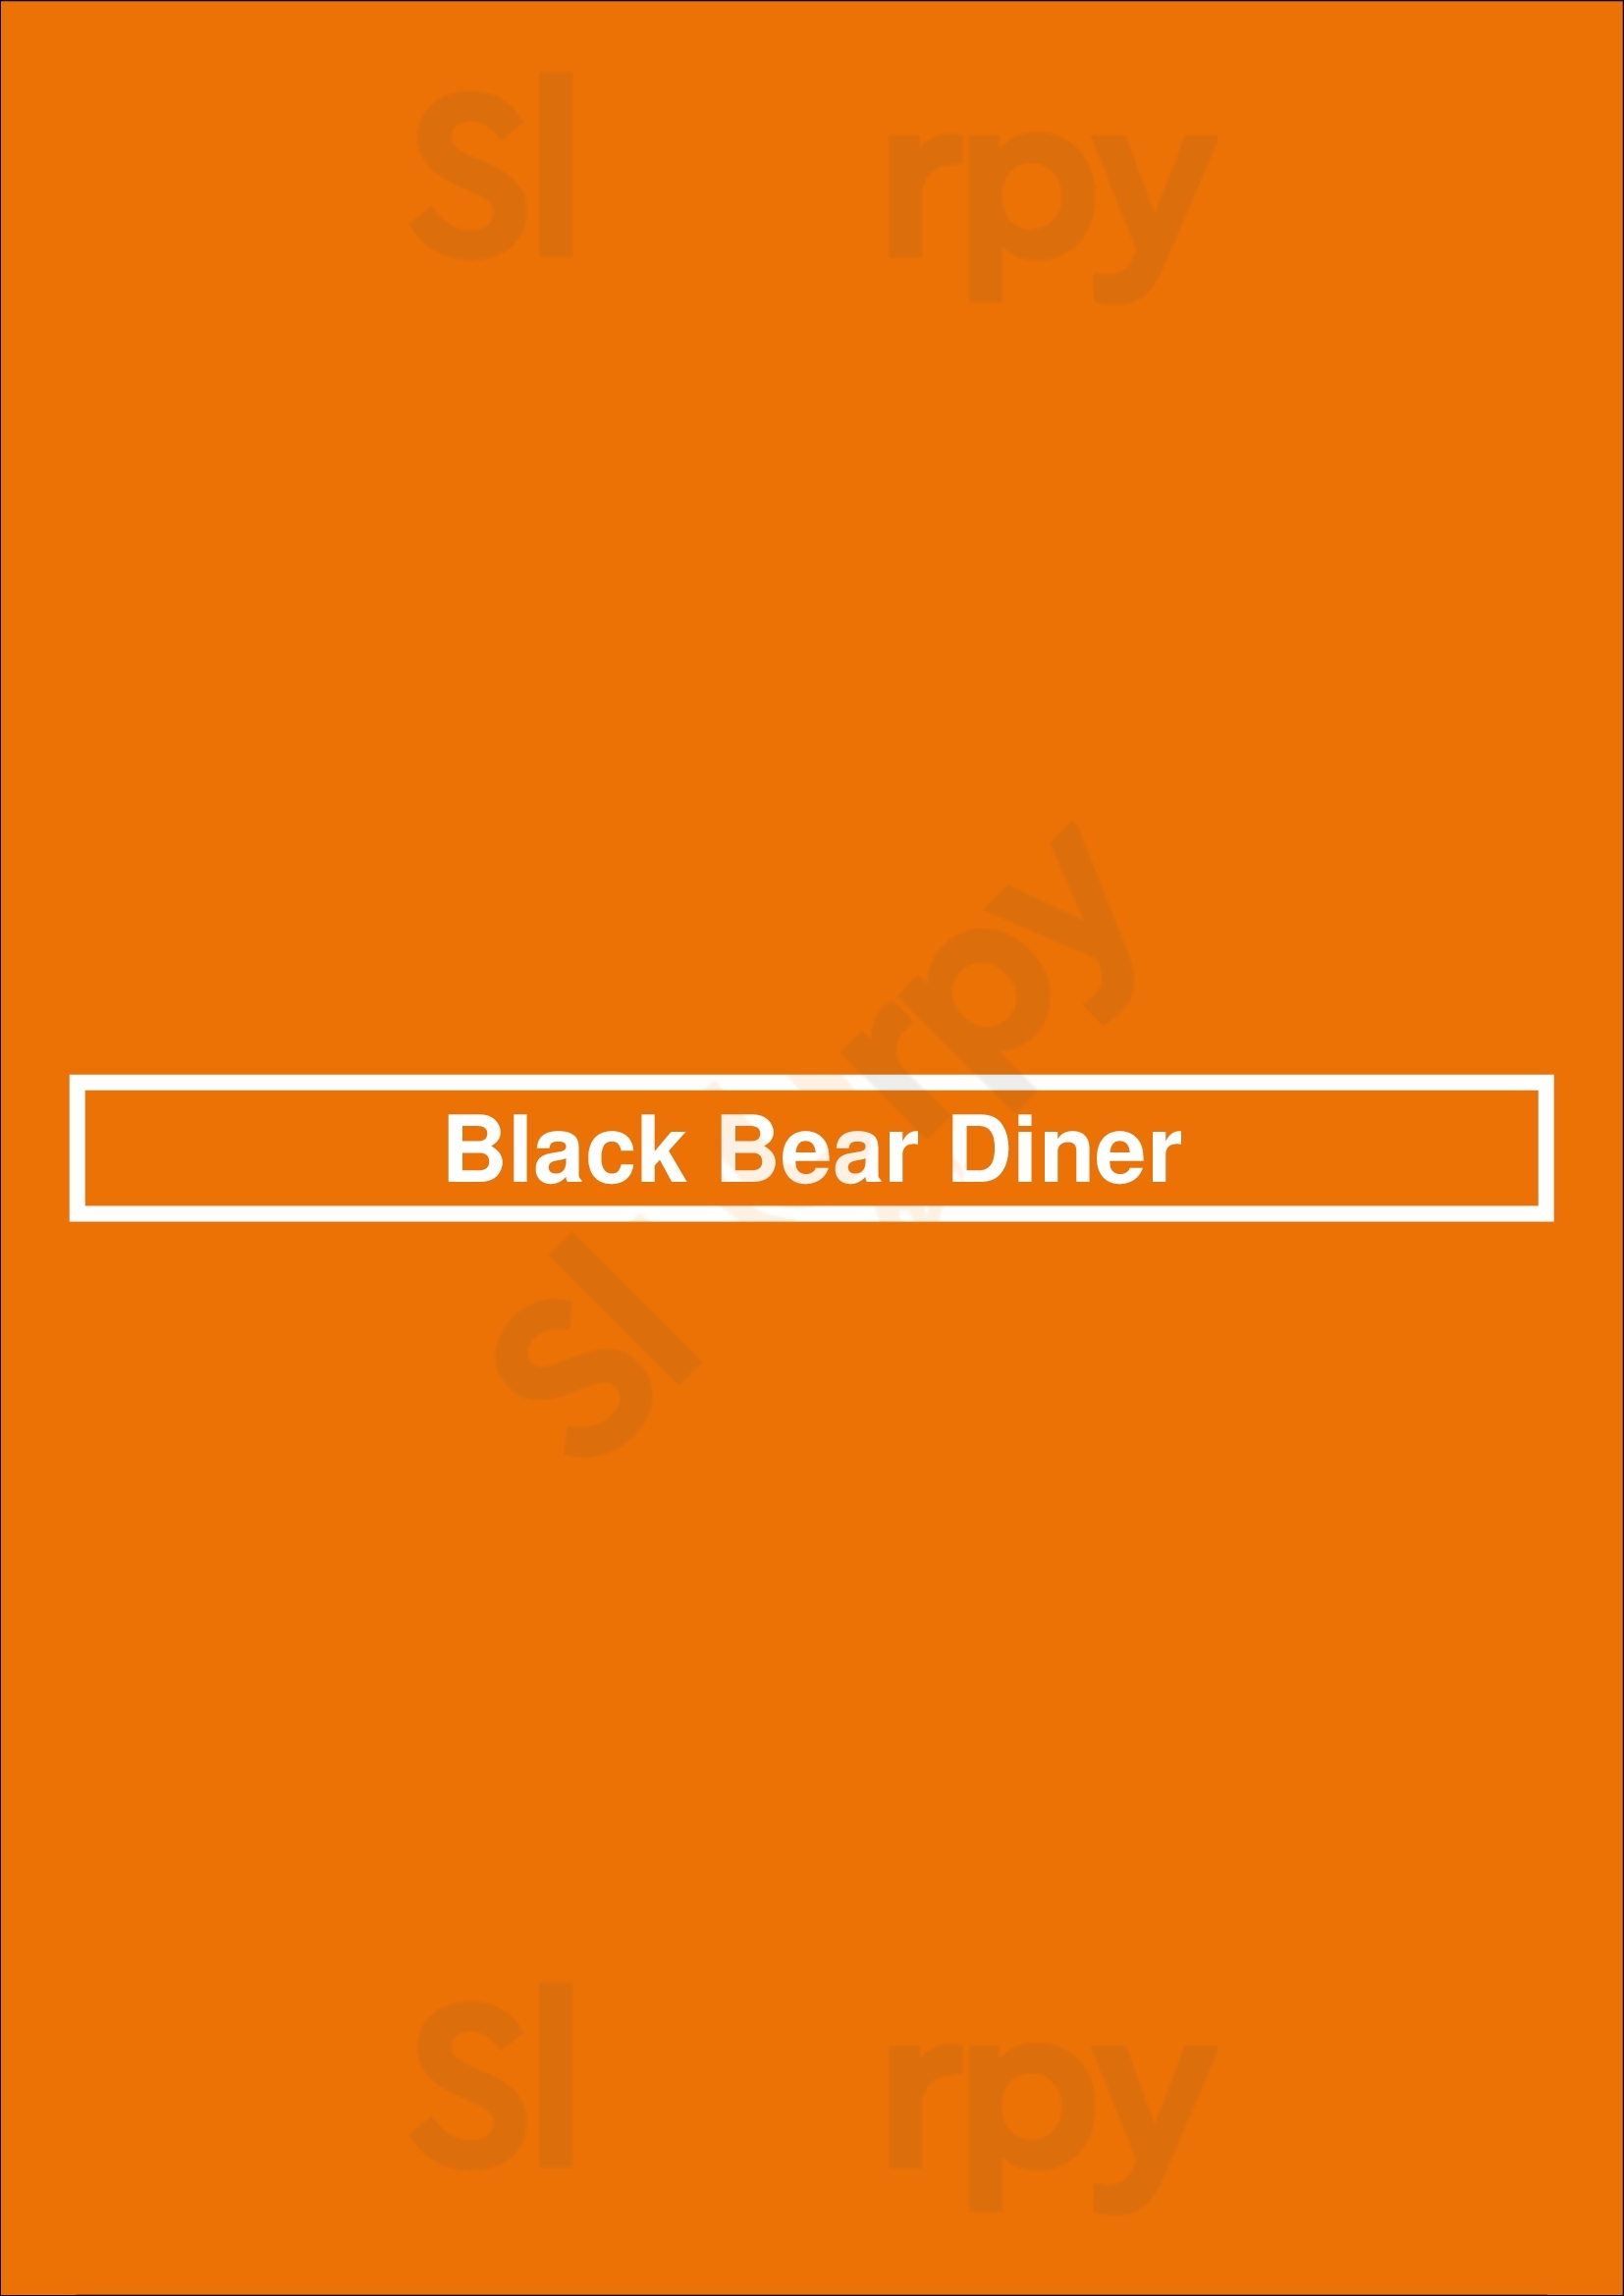 Black Bear Diner Bakersfield Menu - 1